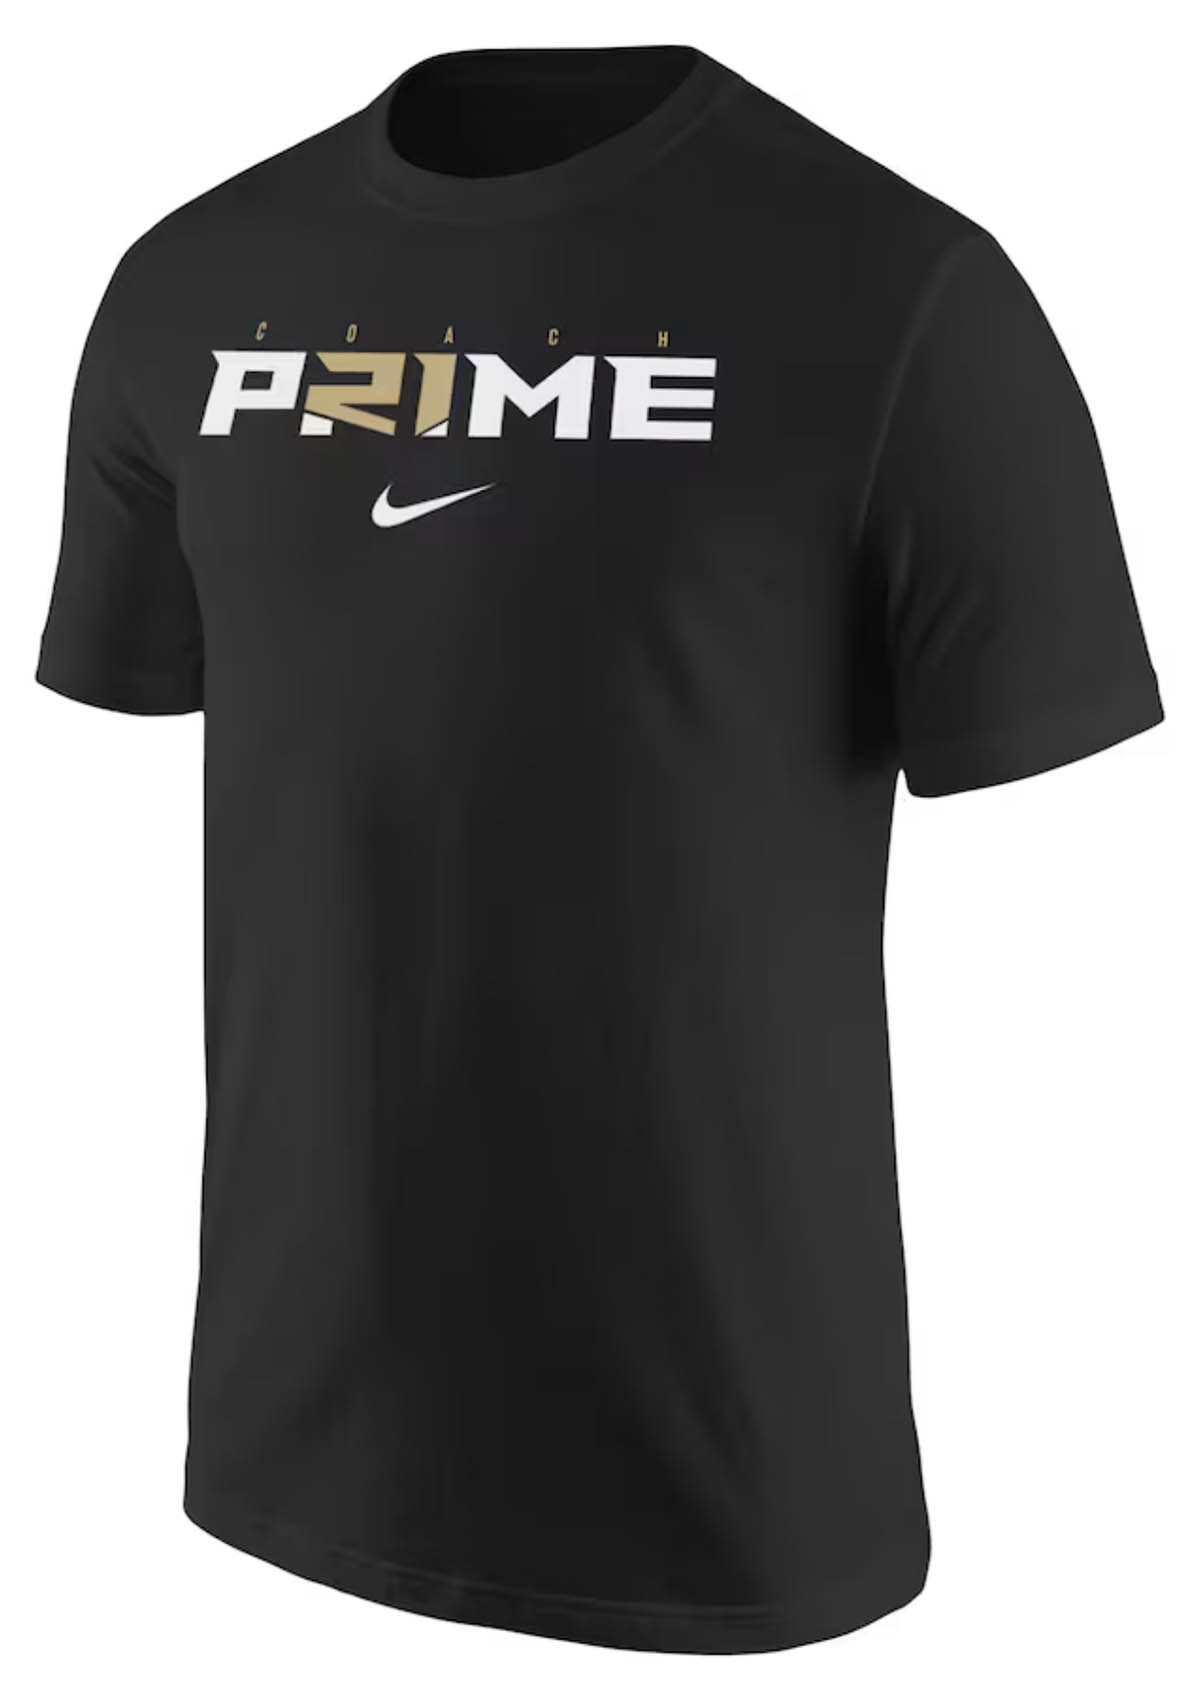 Nike-Deion-Sanders-Prime-T-Shirt-Black-Gold